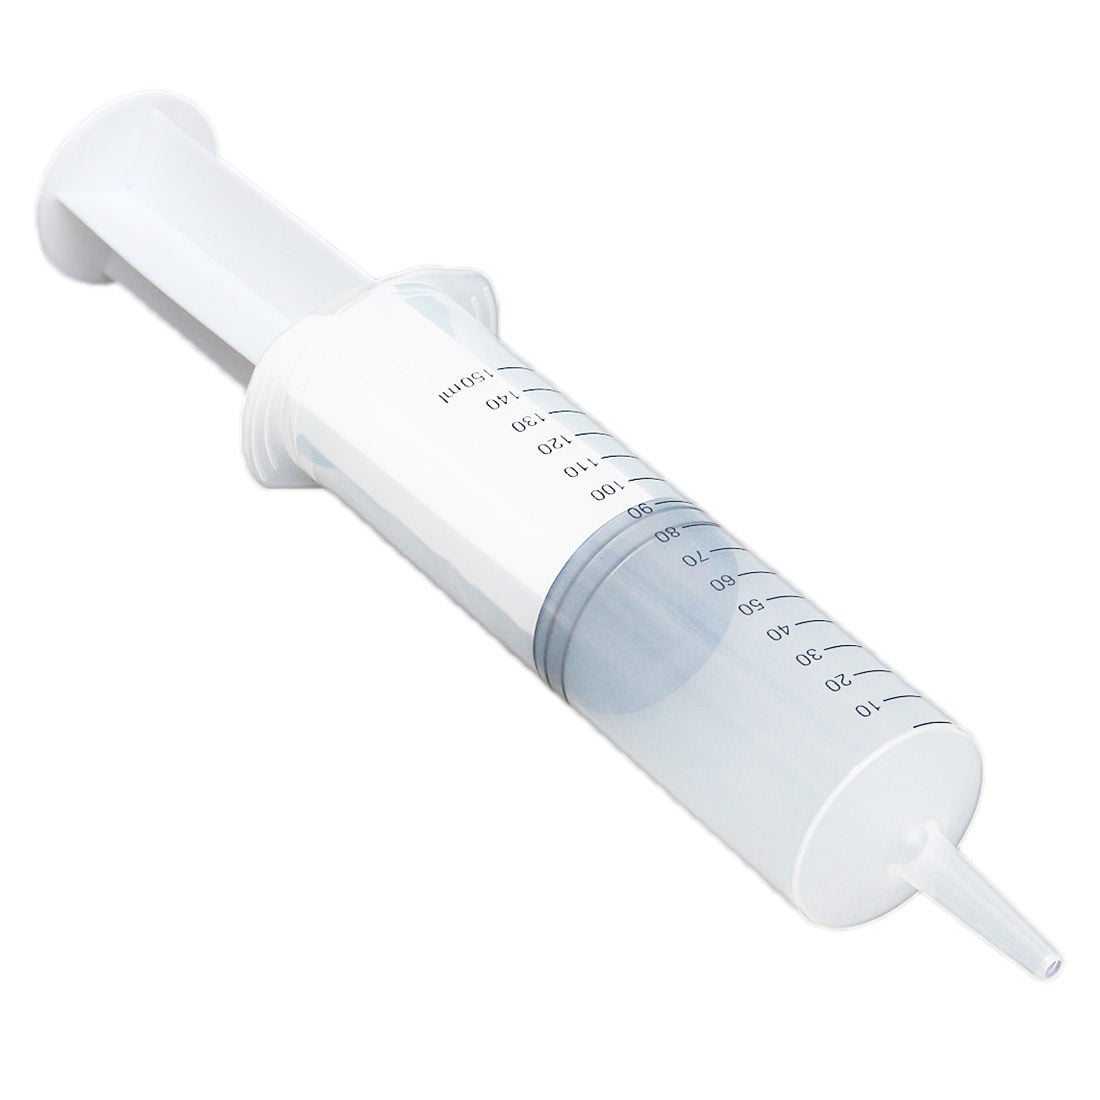 150ml Plastic Syringe Reusable Tube Clear for Measuring Liquids Medical Metric - www.semadata.org